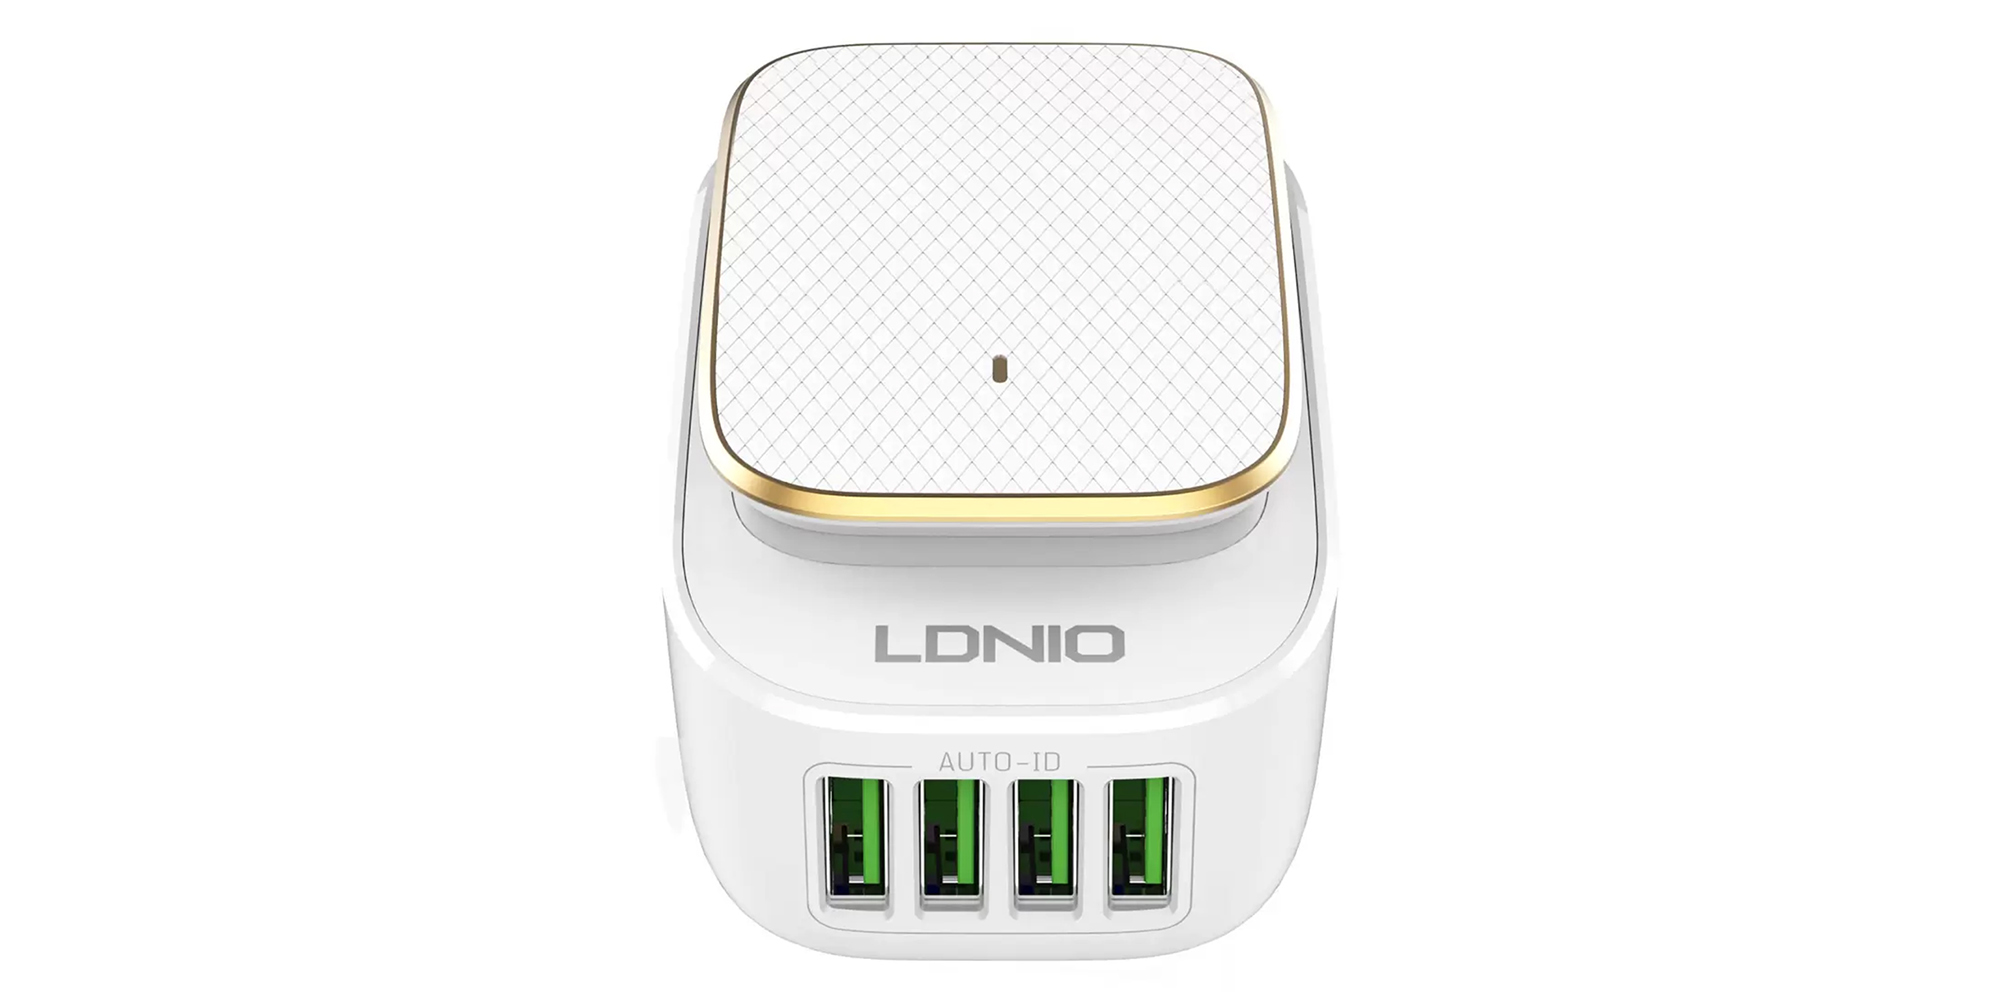 Ładowarka USB Ldnio A4405 - 4x USB z lampką nocną LED - Cztery porty USB